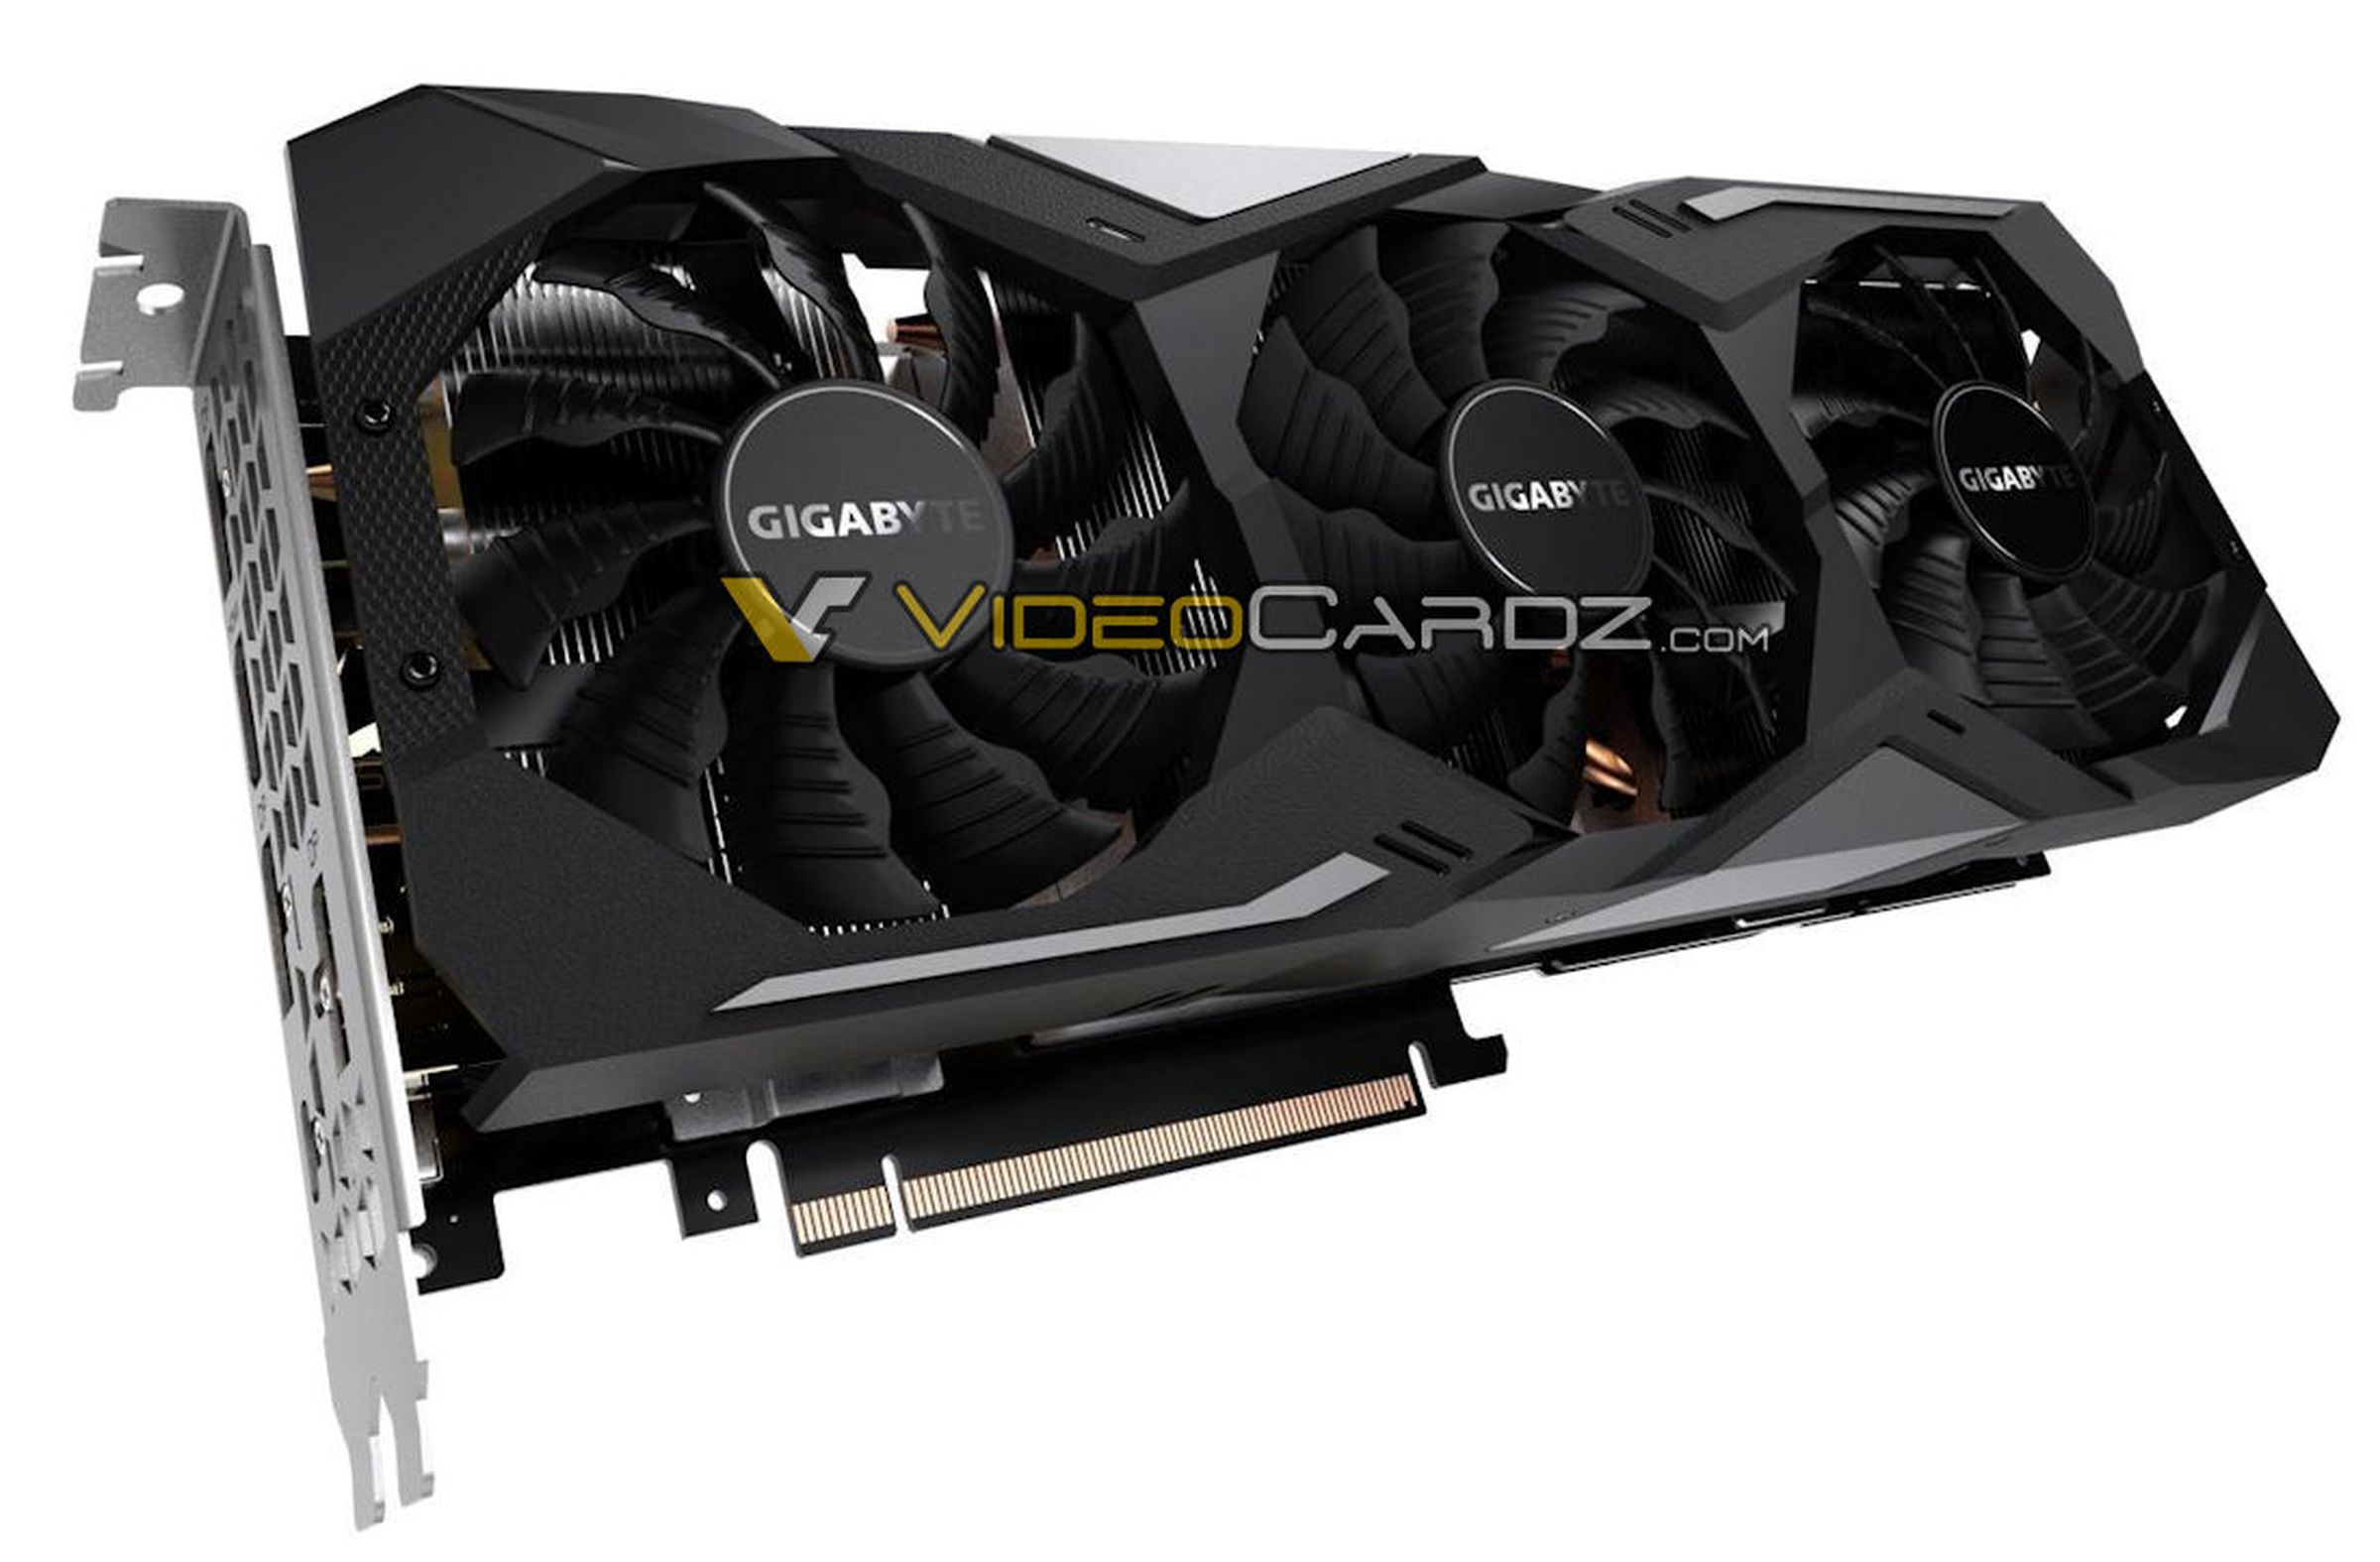 Nvidia’s rumored GeForce RTX 2080 series